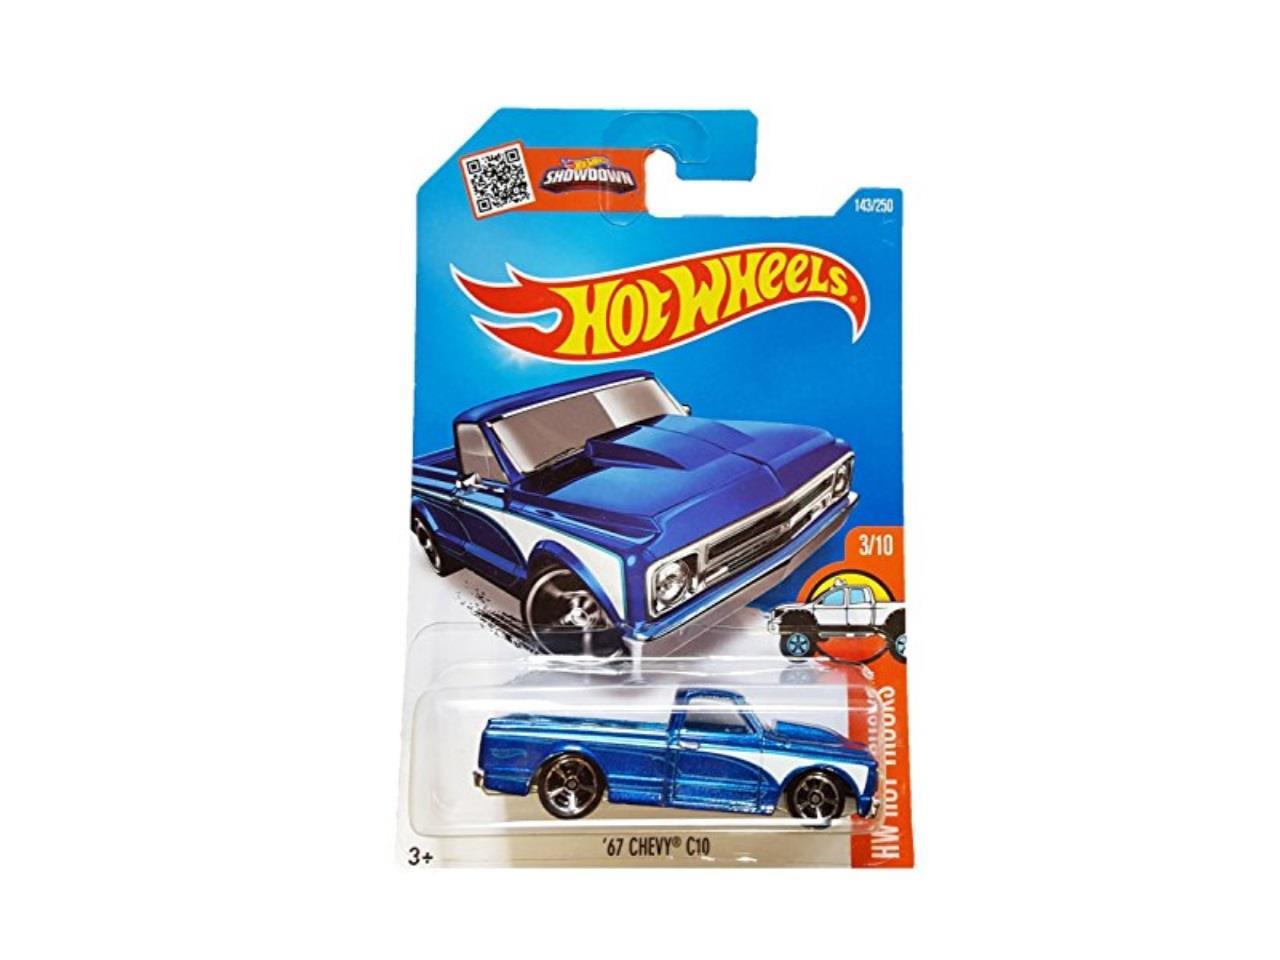 2016 #143/250 - HW Hot Trucks Serie 3/10 '67 CHEVY C10 Blau Hot Wheels 